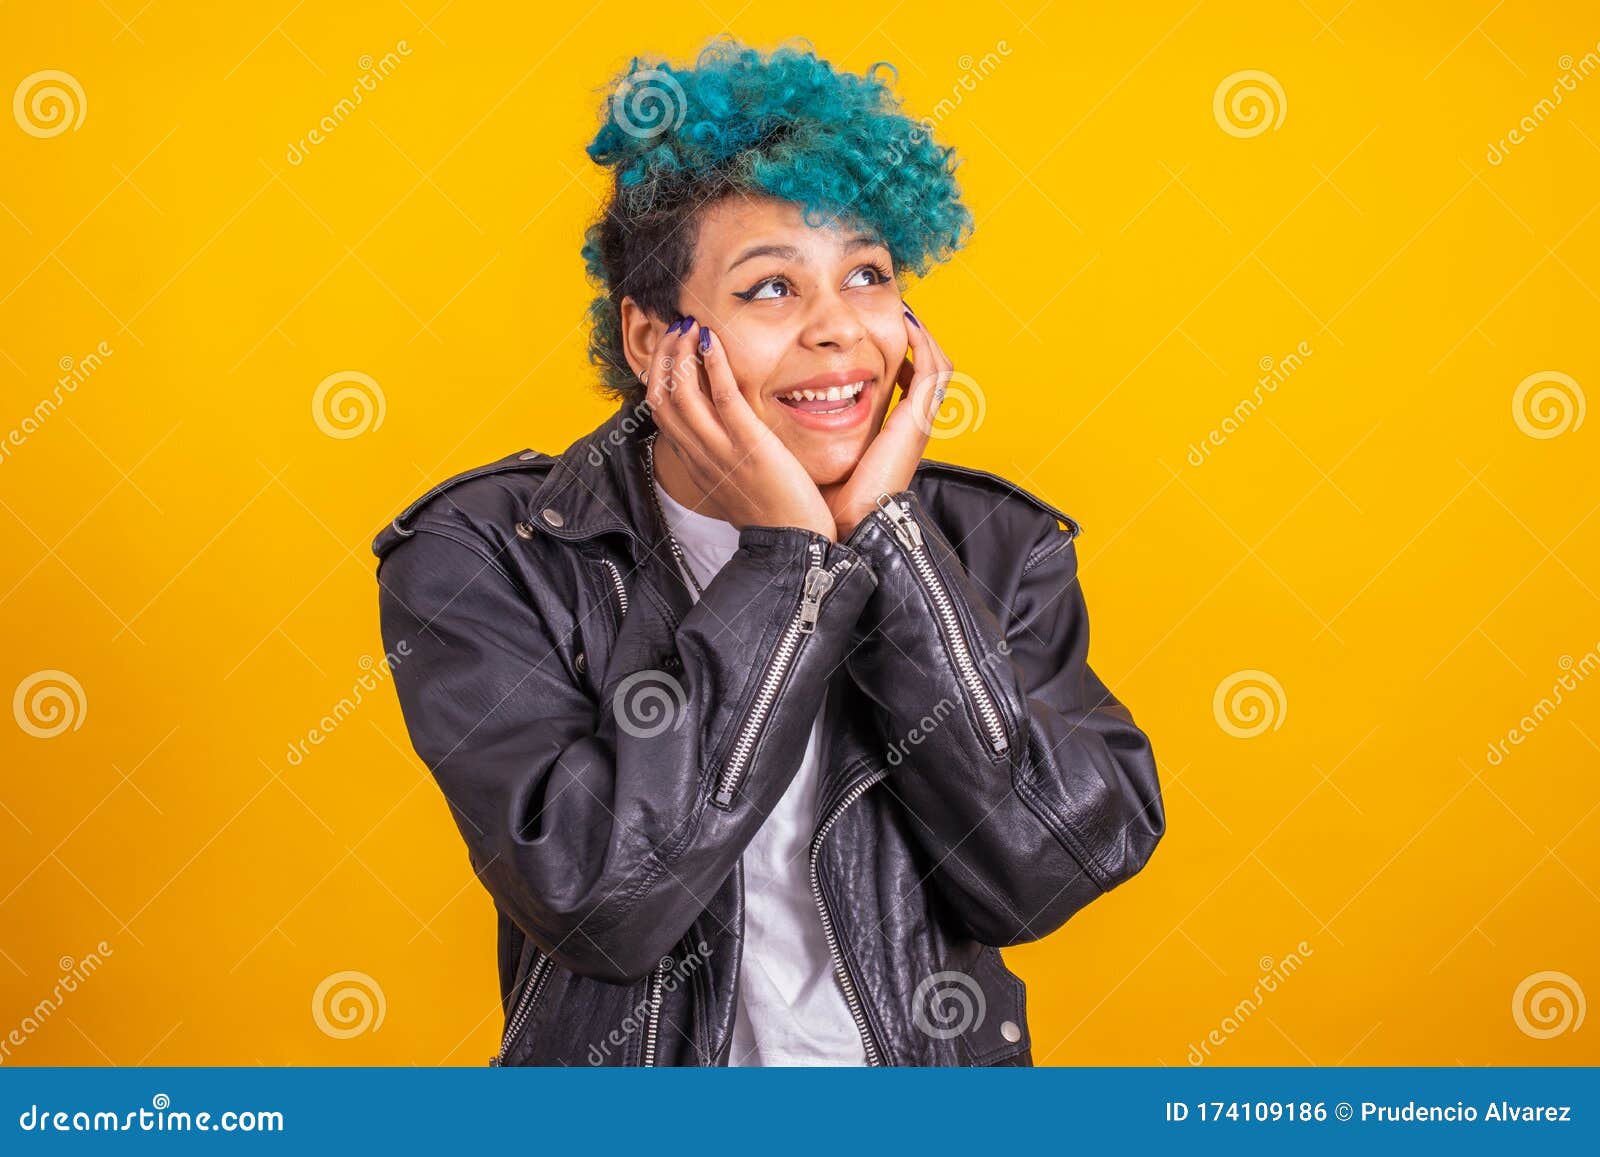 7. Dark Blue Curly Hair Guy - Google Images - wide 7